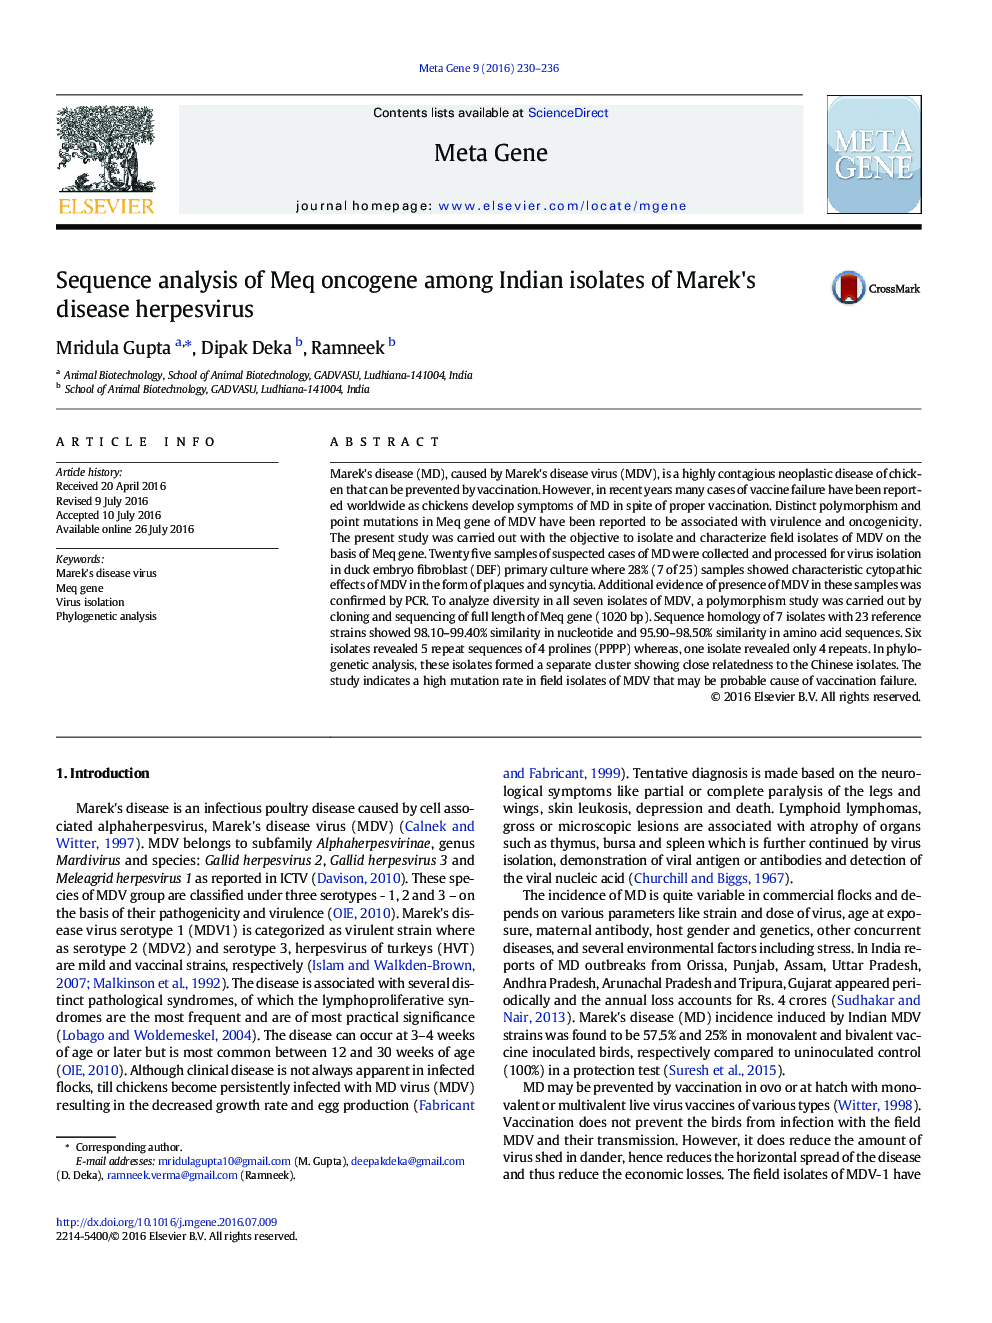 Sequence analysis of Meq oncogene among Indian isolates of Marek's disease herpesvirus